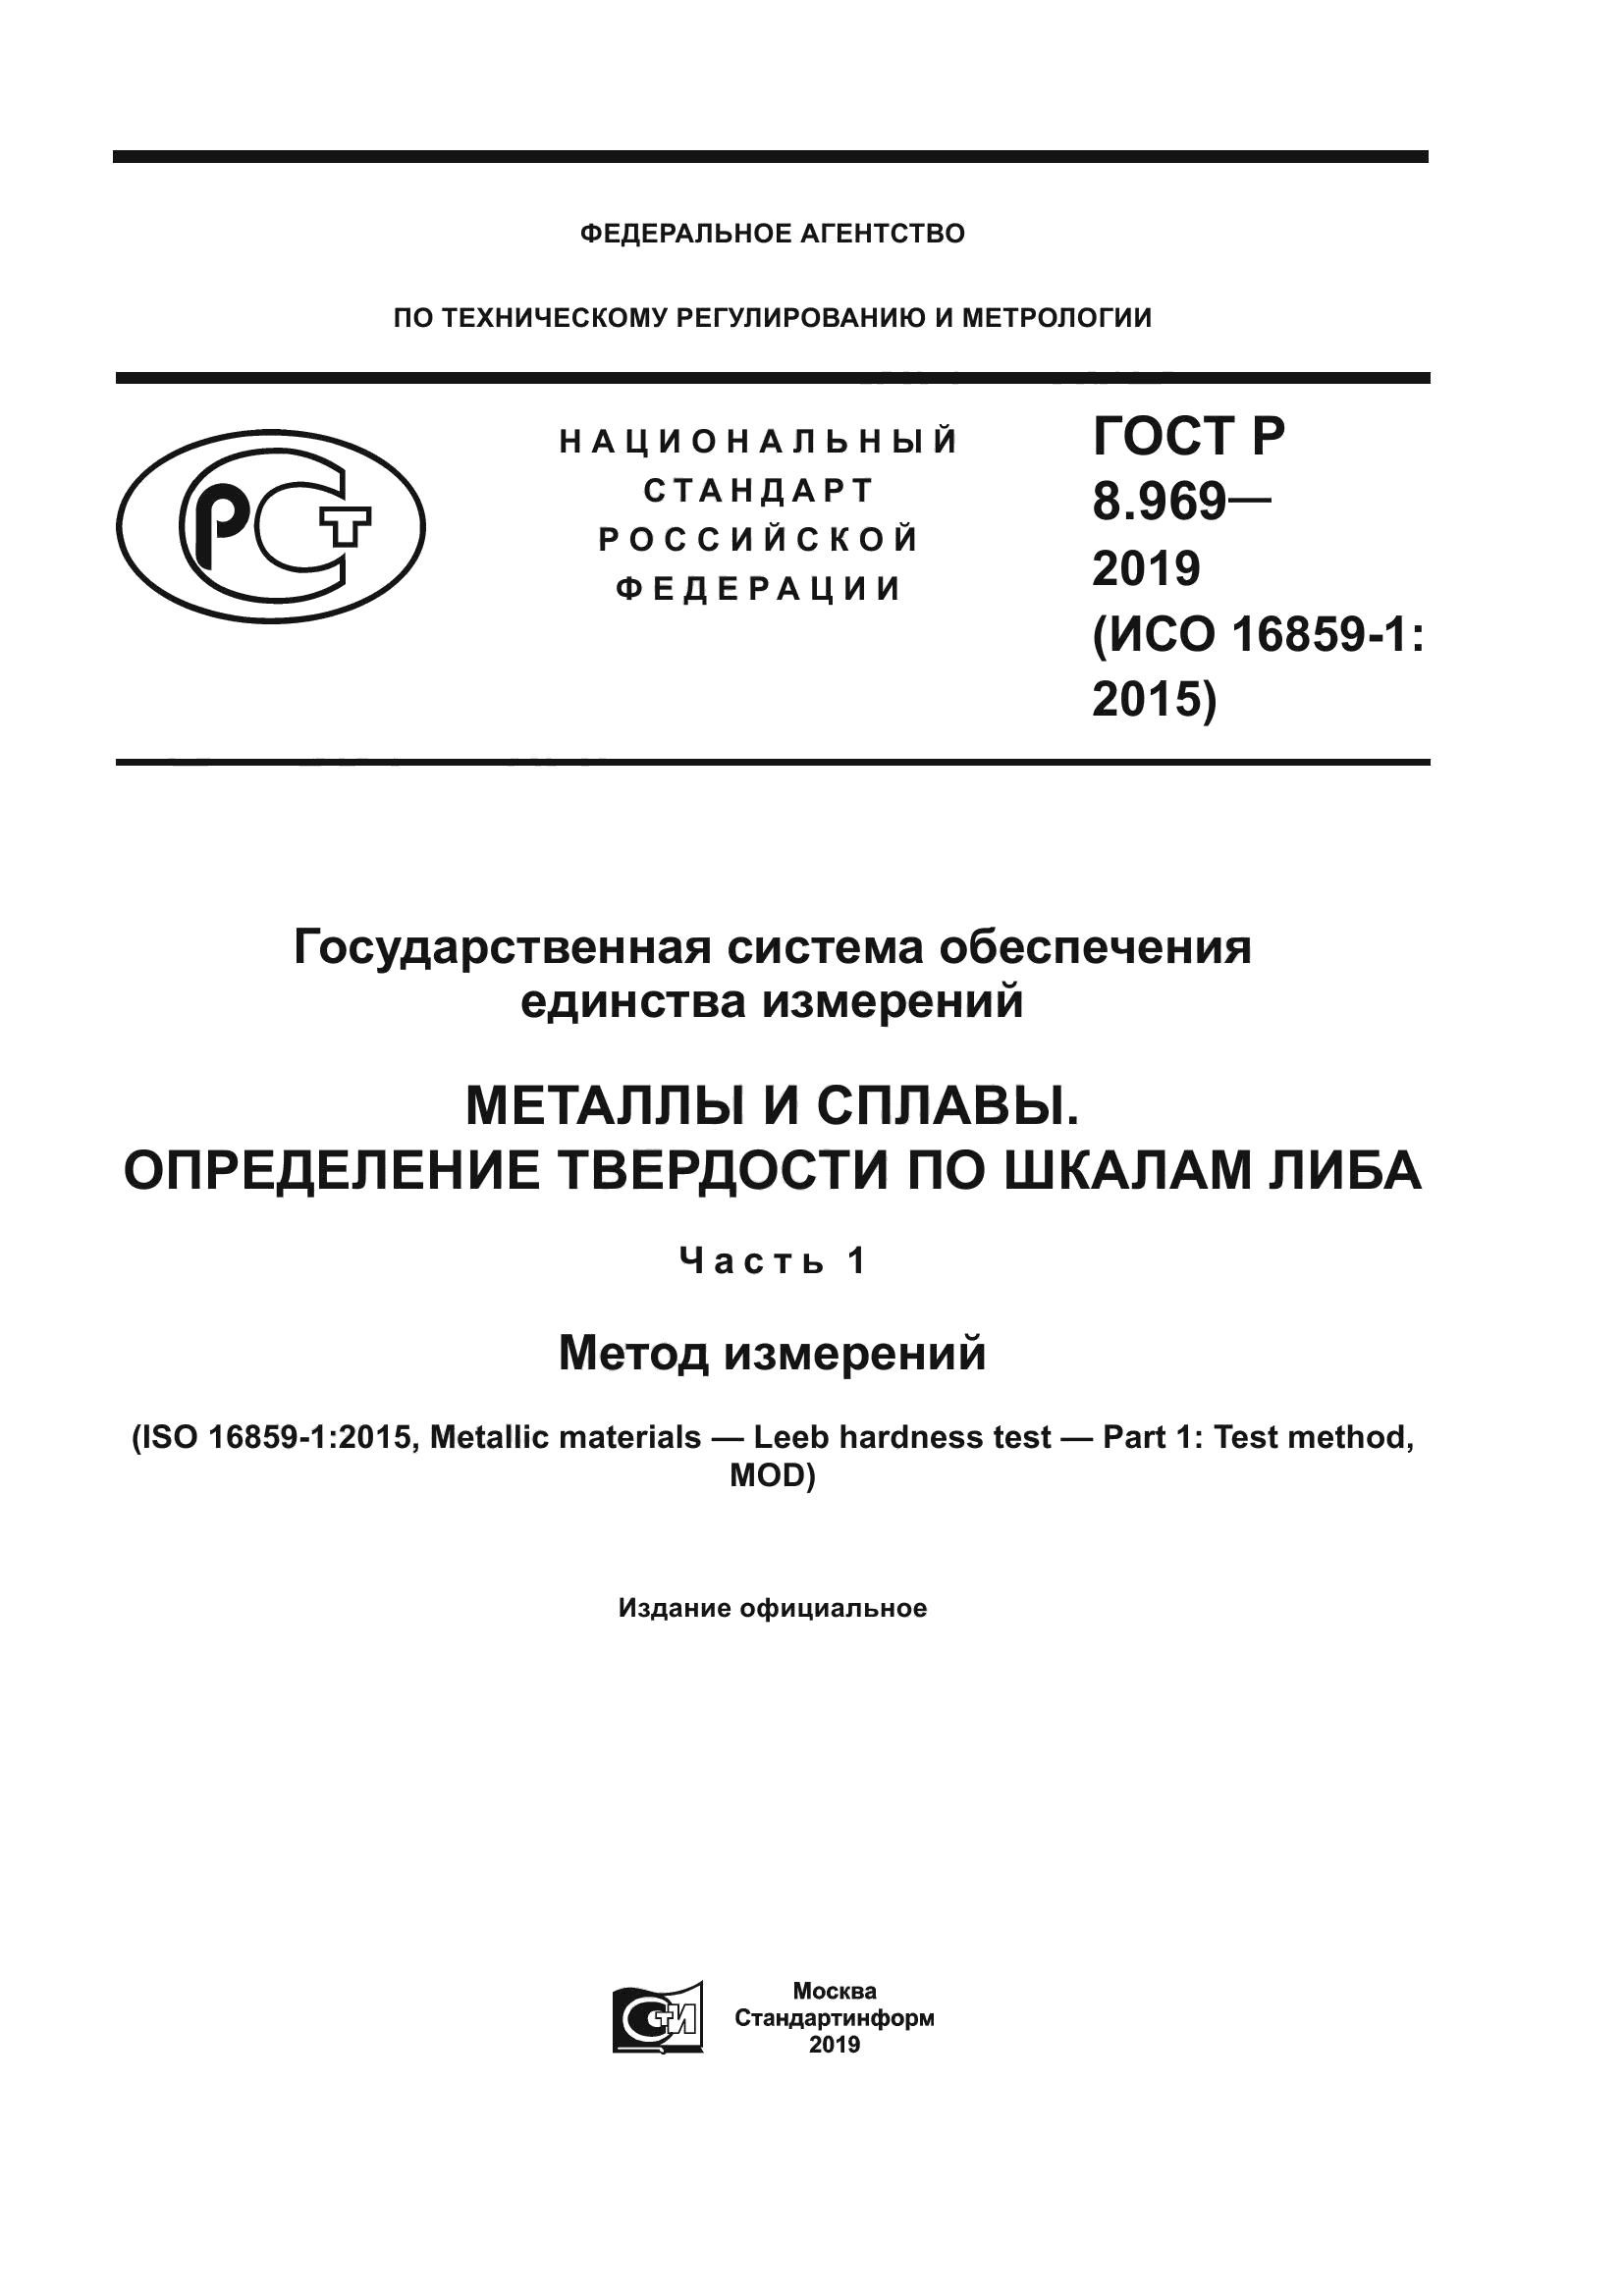 ГОСТ Р 8.969-2019